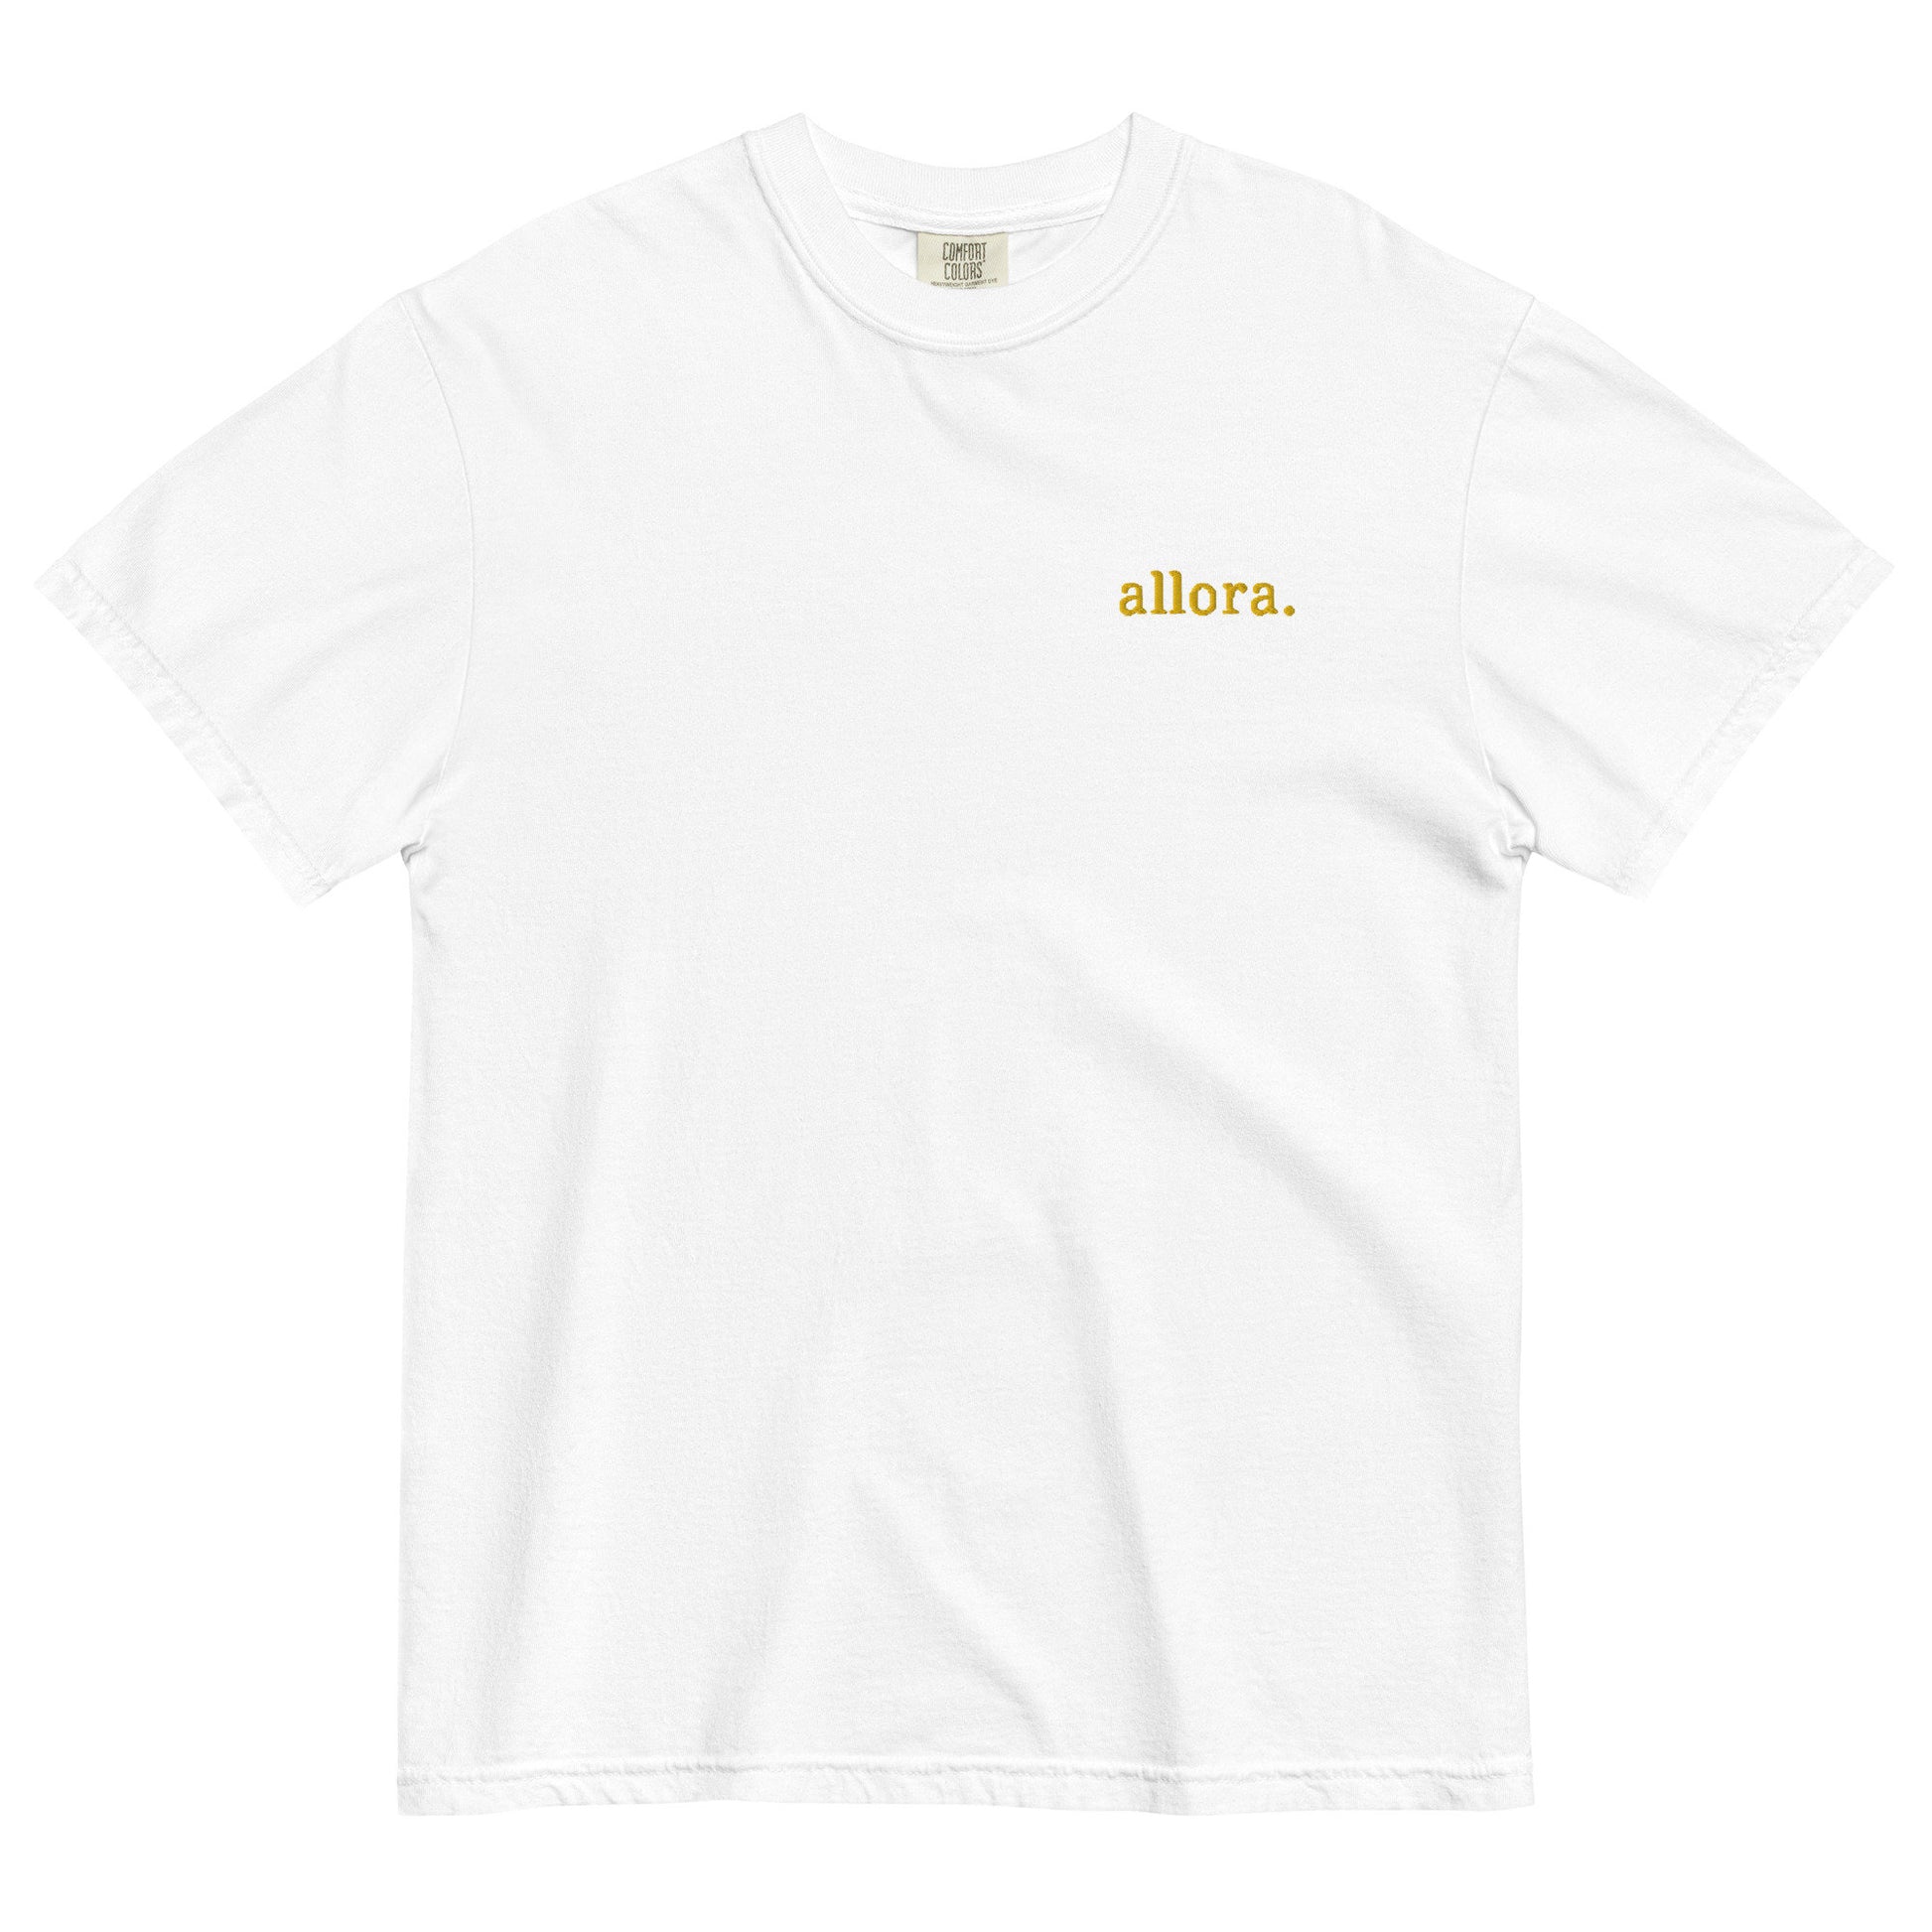 Allora T Shirt - Italian Sayings - Embroidered Cotton Baseball Shirt - Multiple Colors